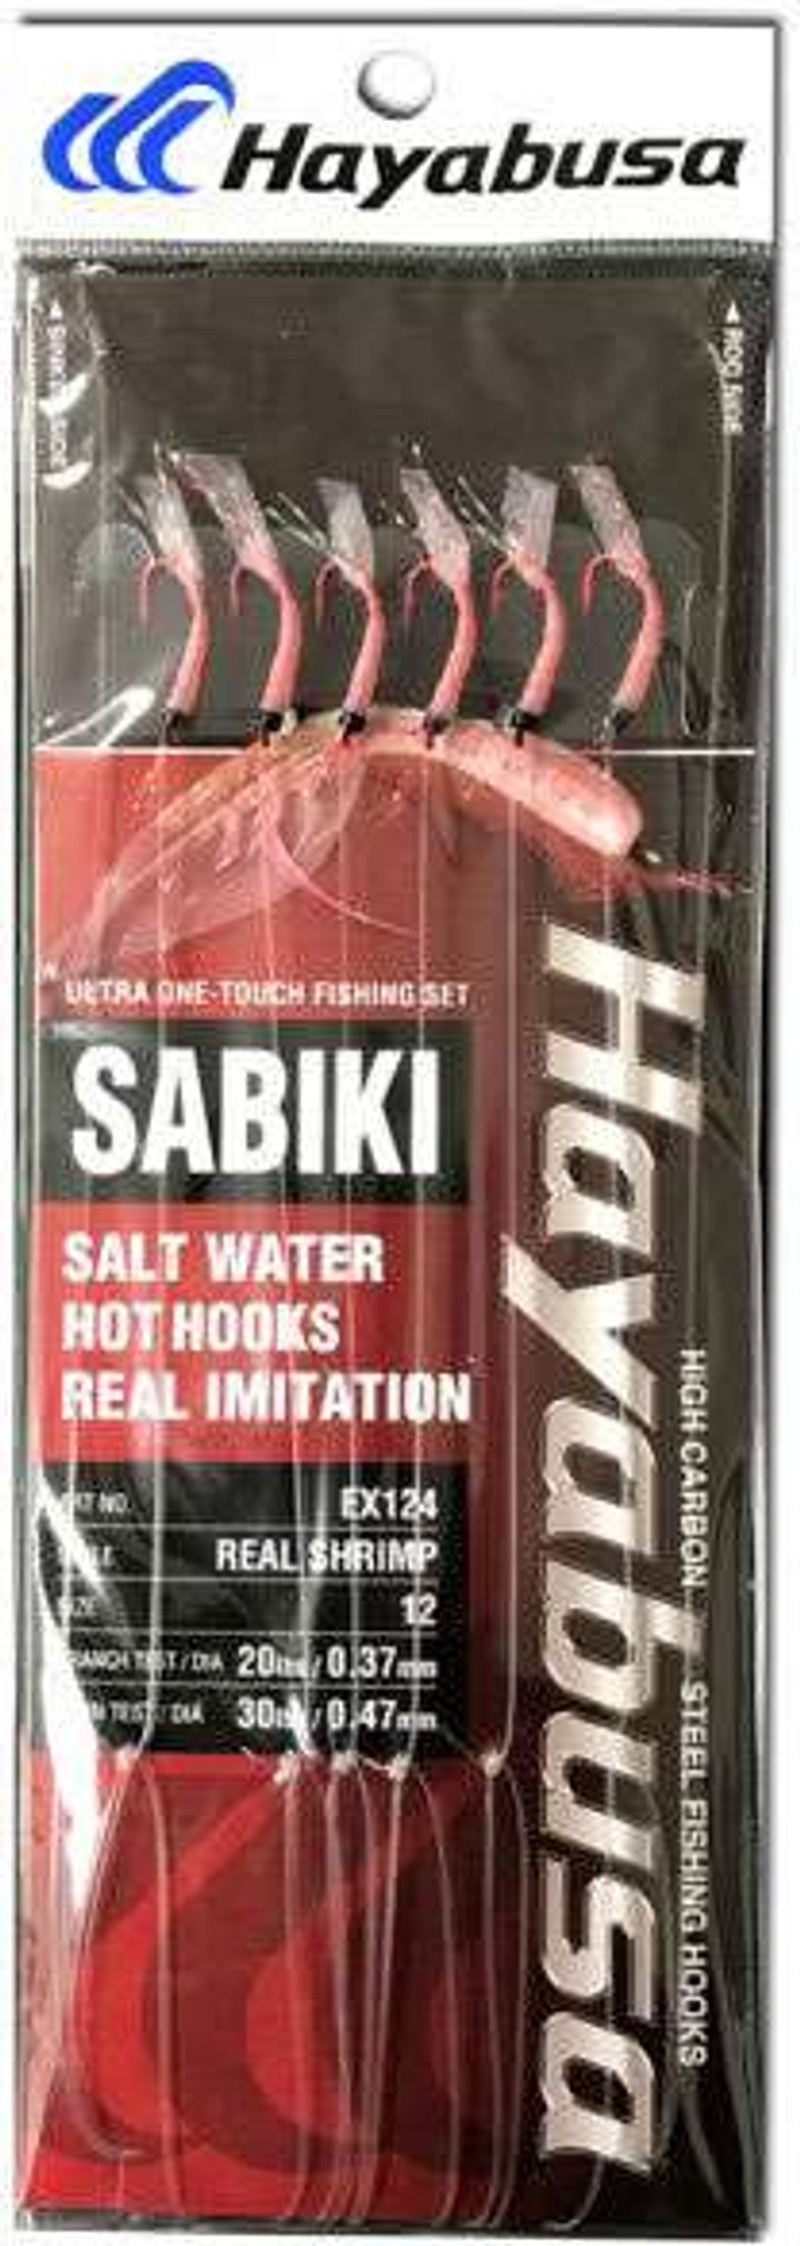 Hayabusa Sabiki Saltwater Hot Hooks - Red - Real Shrimp - TackleDirect